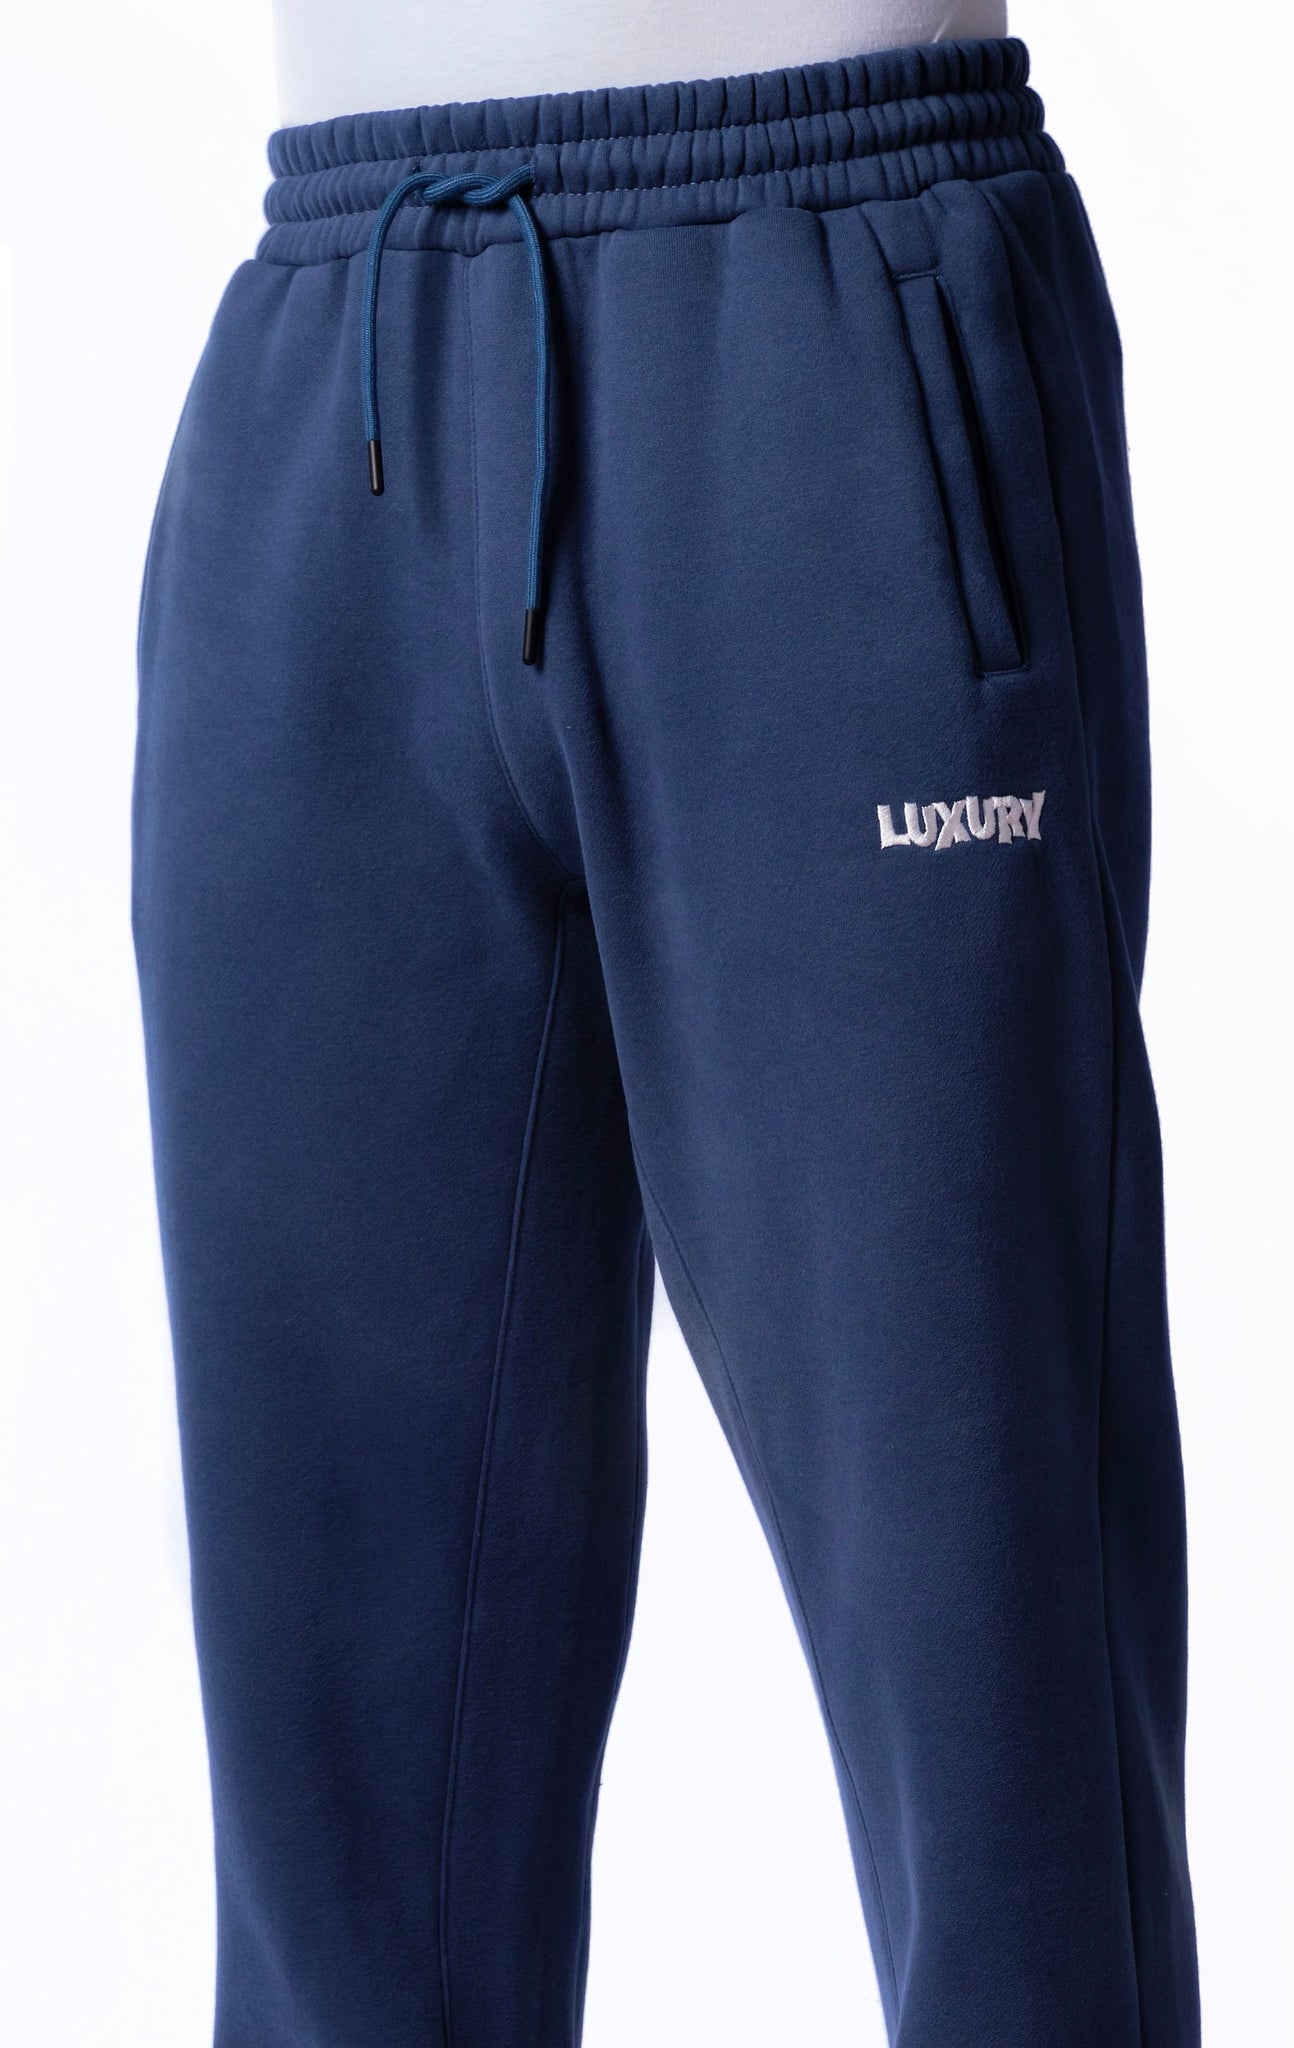 Blue Luxury Sweatpants